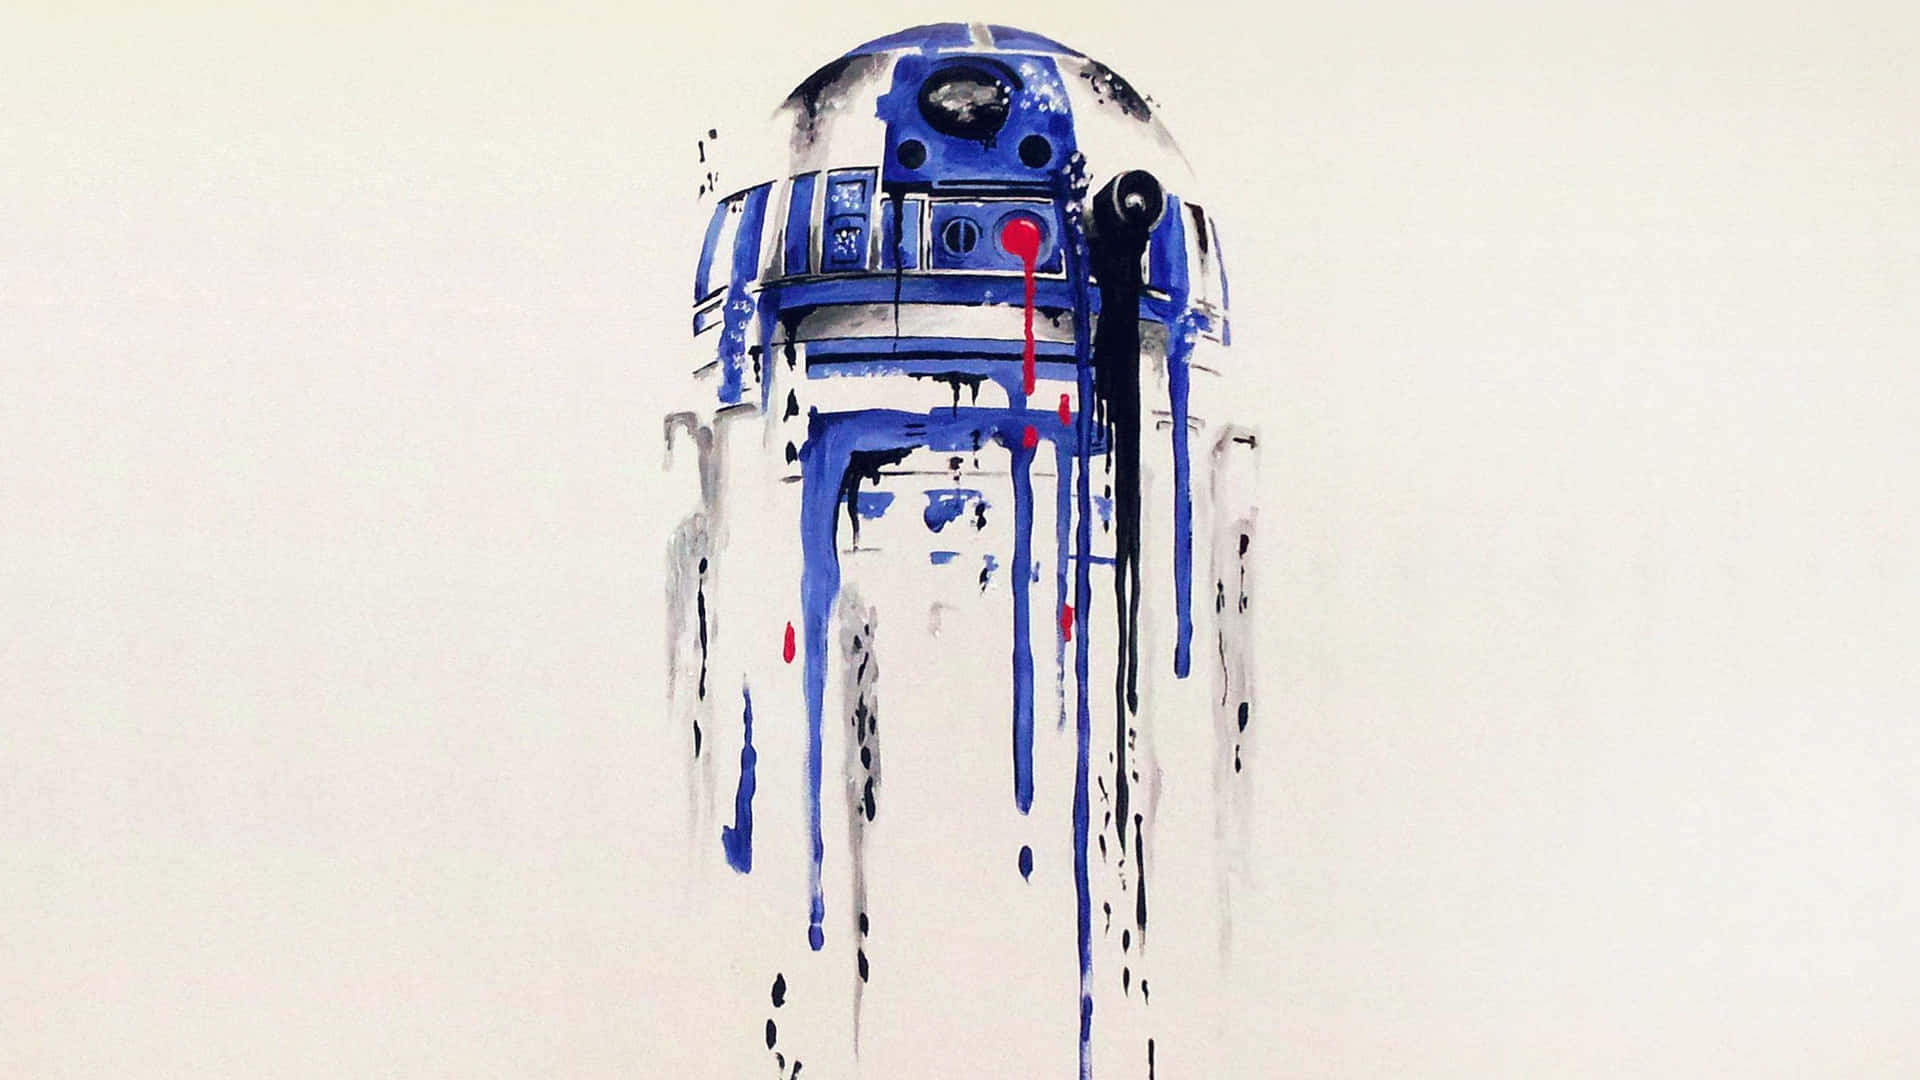 "The trusty droid, R2D2" Wallpaper